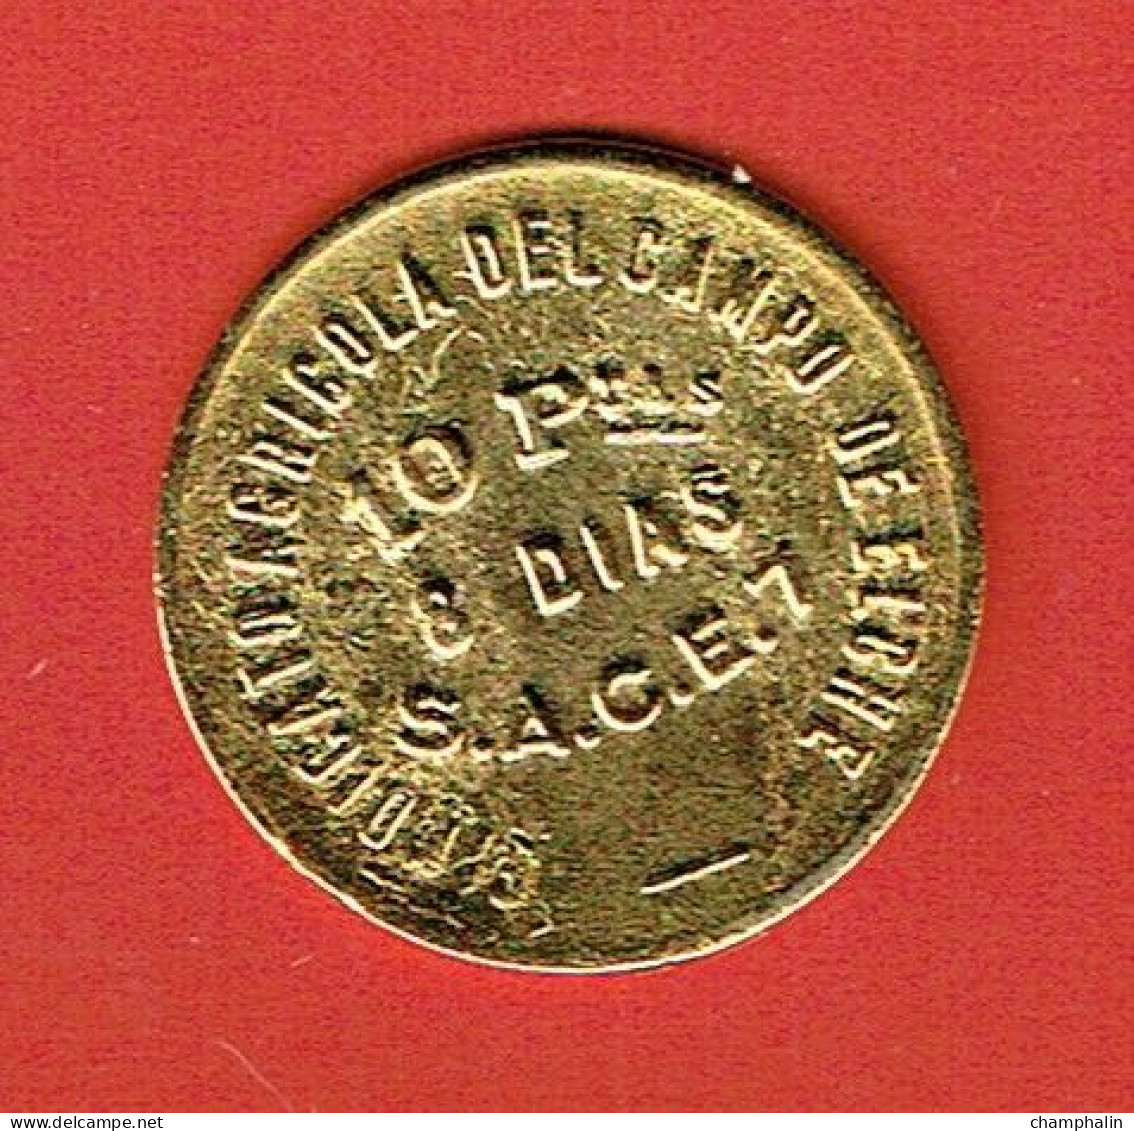 Espagne - Reproduction Monnaie - 10 Pesetas S.A.C.E.7 Sindicato Agricola Del Campo De Elche (Valencia) -  Necessity Money